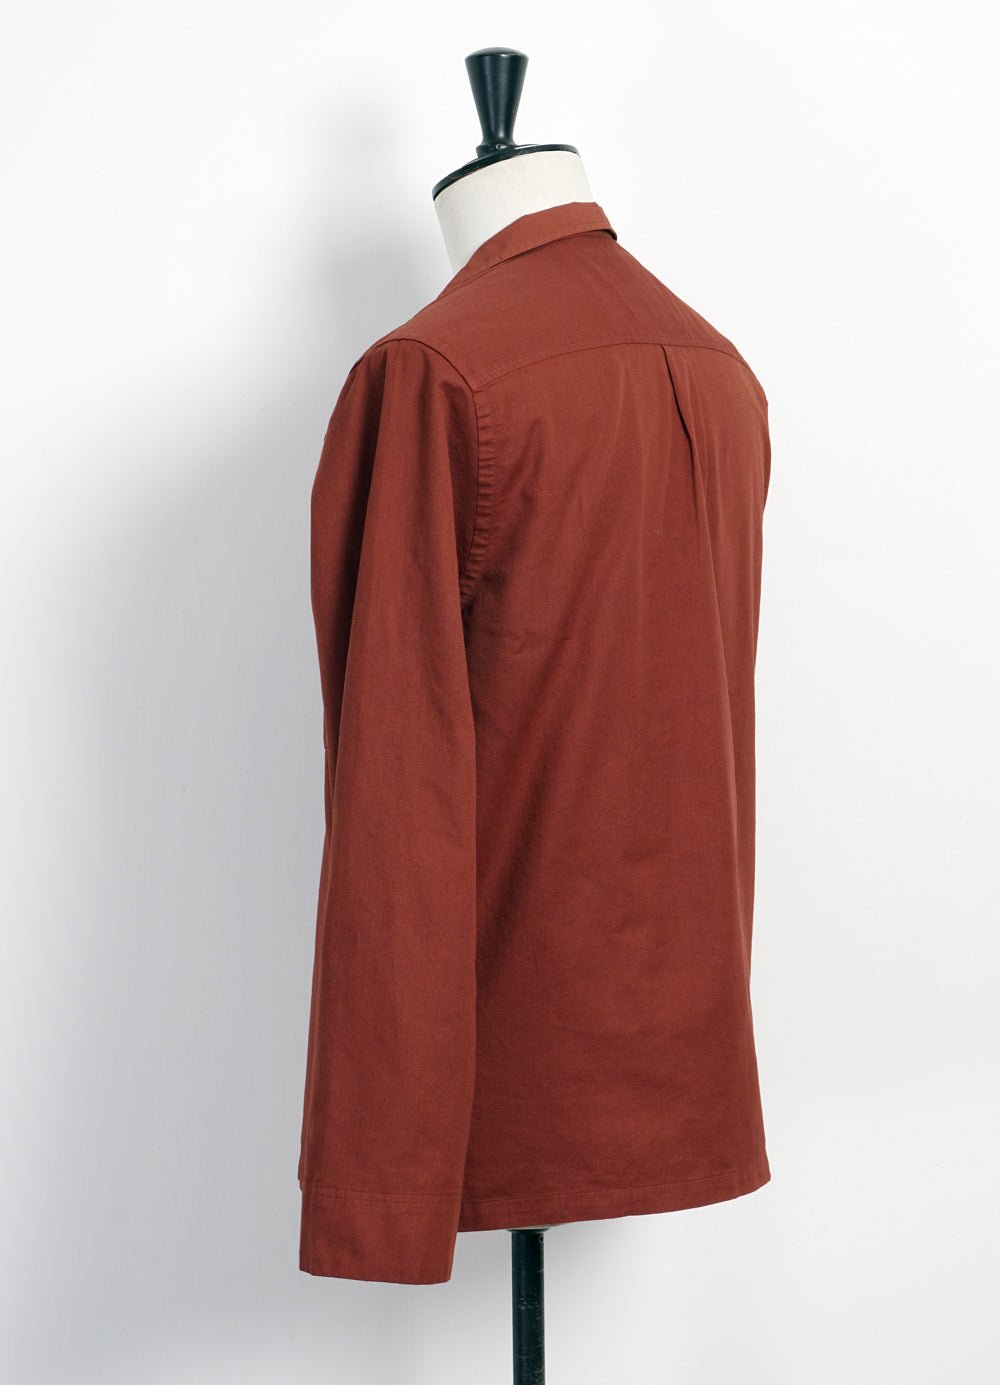 HANSEN GARMENTS - MARIUS | Casual Pull On Shirt | Terracotta - HANSEN Garments